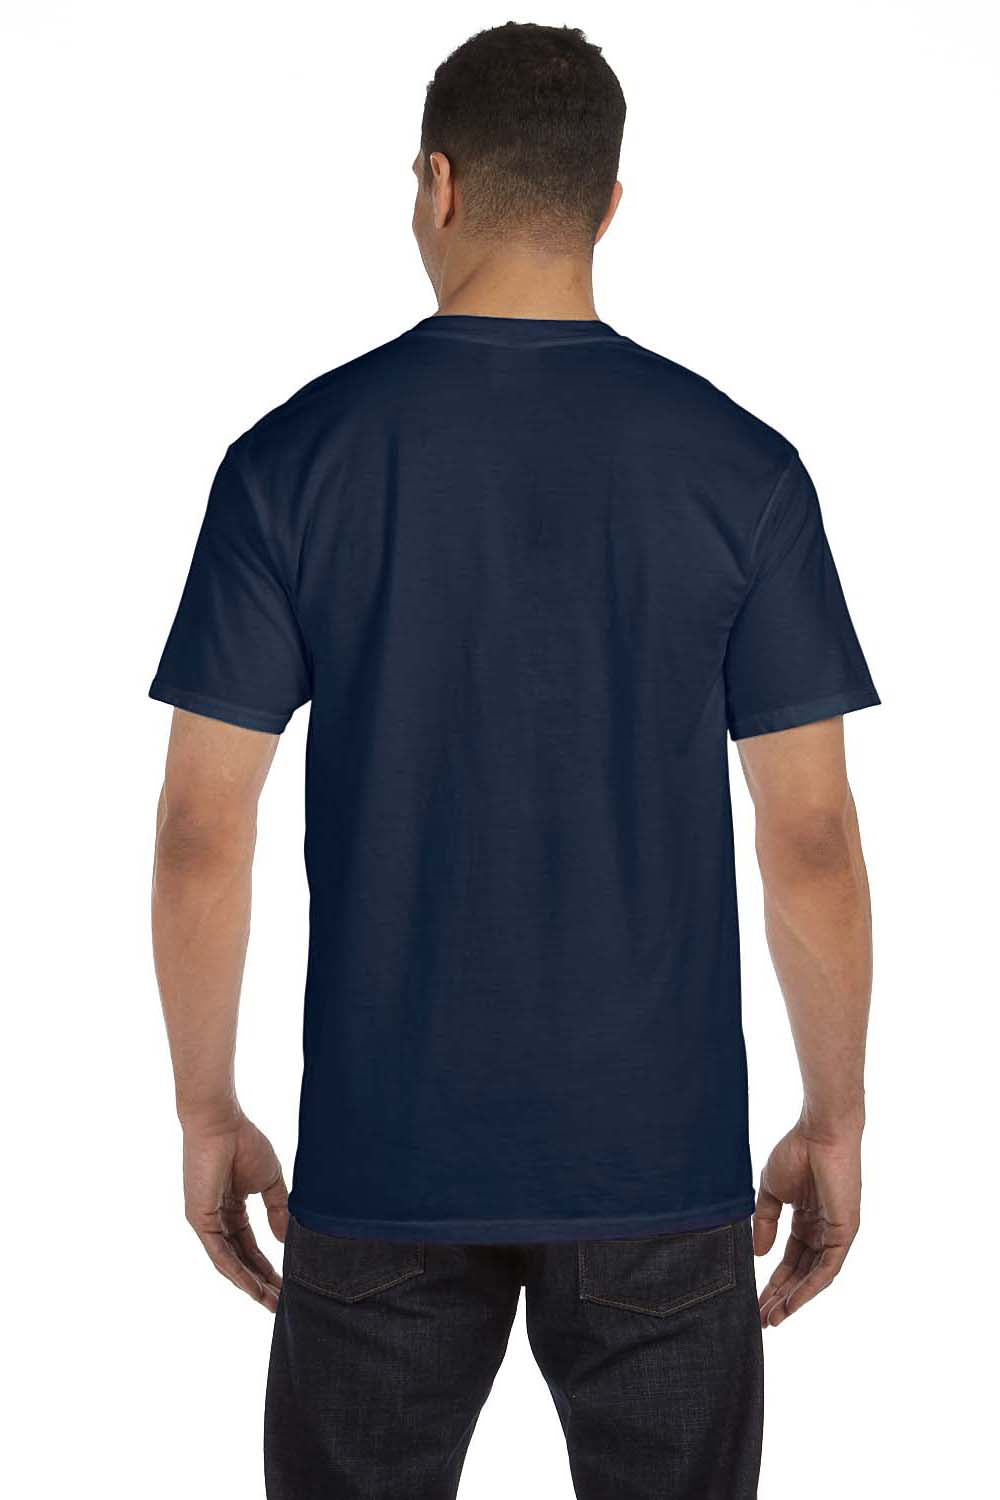 Comfort Colors 6030CC Mens Short Sleeve Crewneck T-Shirt w/ Pocket Navy Blue Back